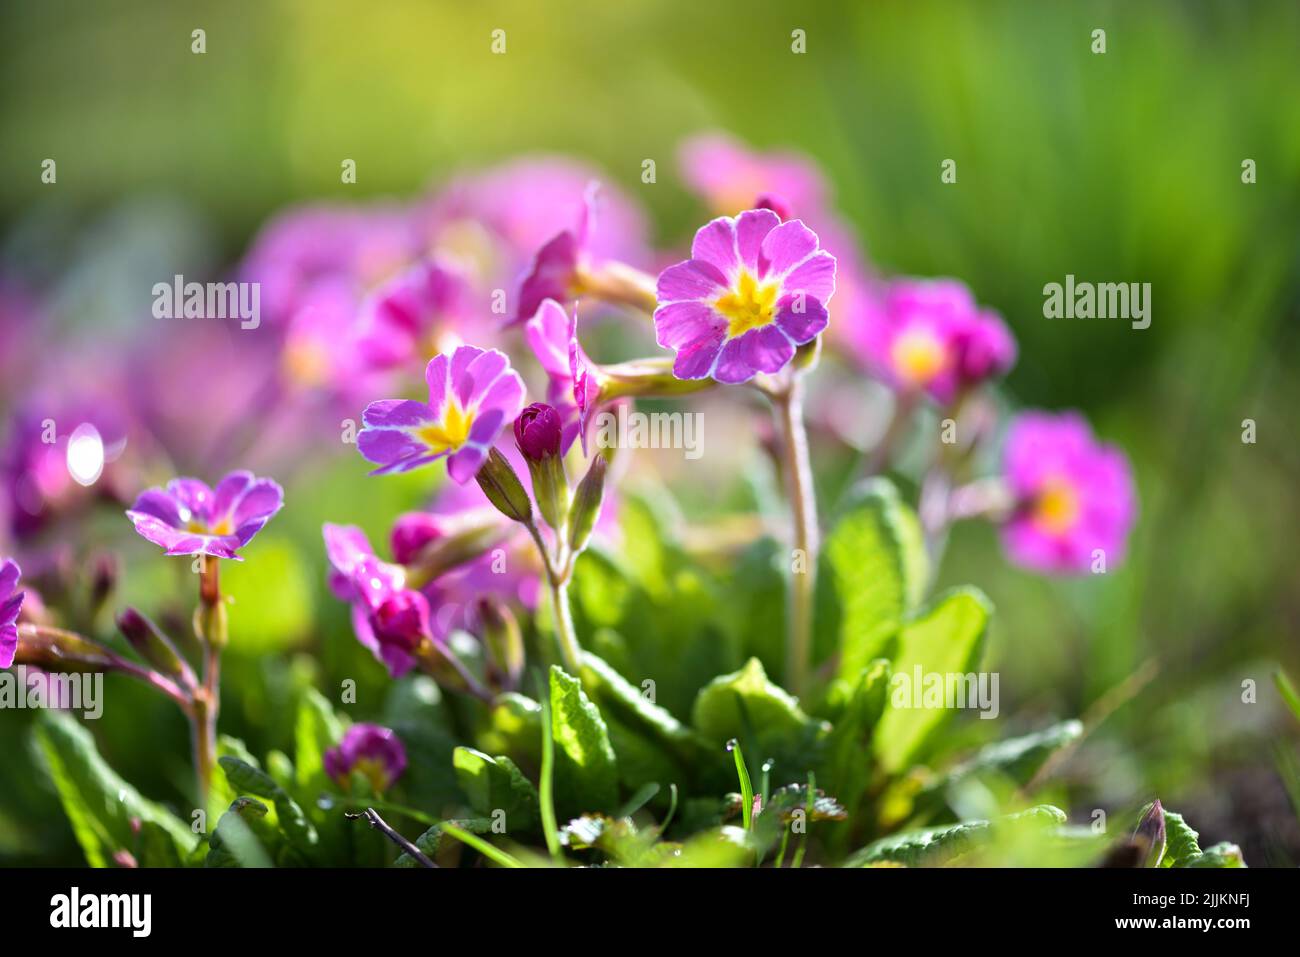 Spring flowers of Primula juliae (Julias Primrose) or purple primrose in the spring garden. Stock Photo